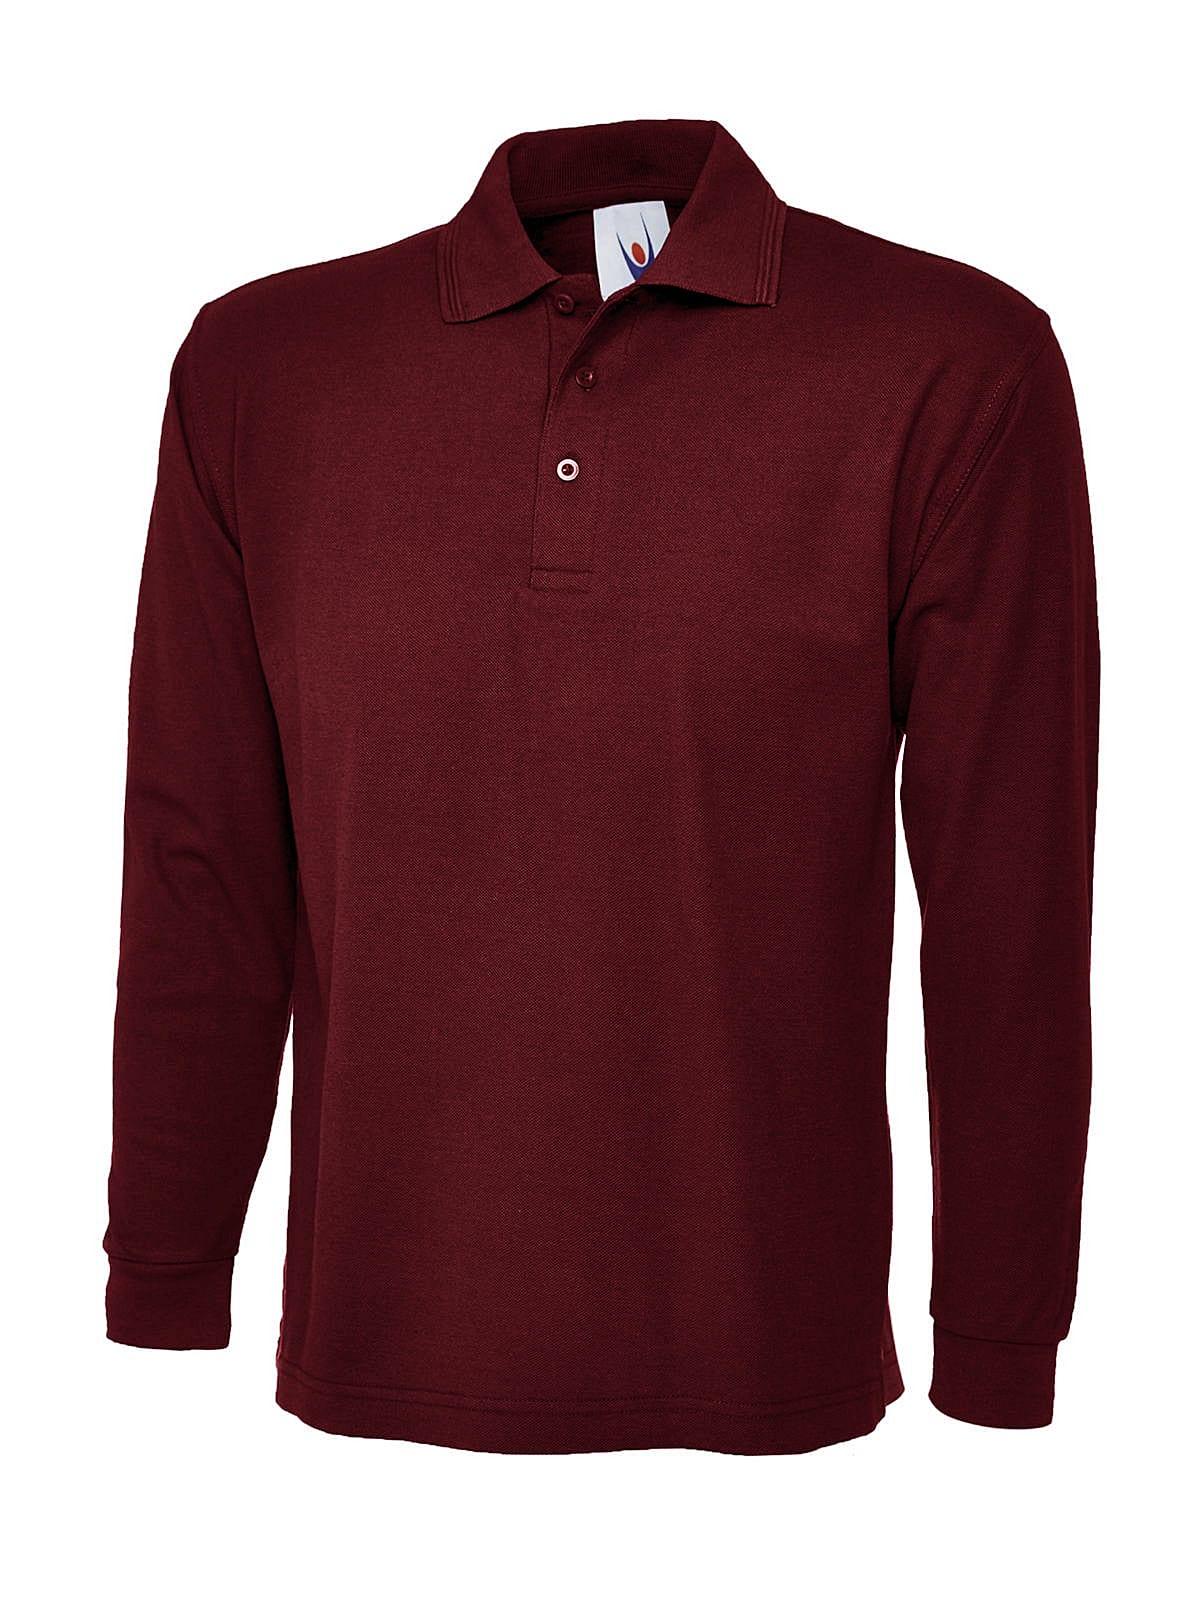 Uneek 220GSM Long-Sleeve Polo Shirt in Maroon (Product Code: UC113)